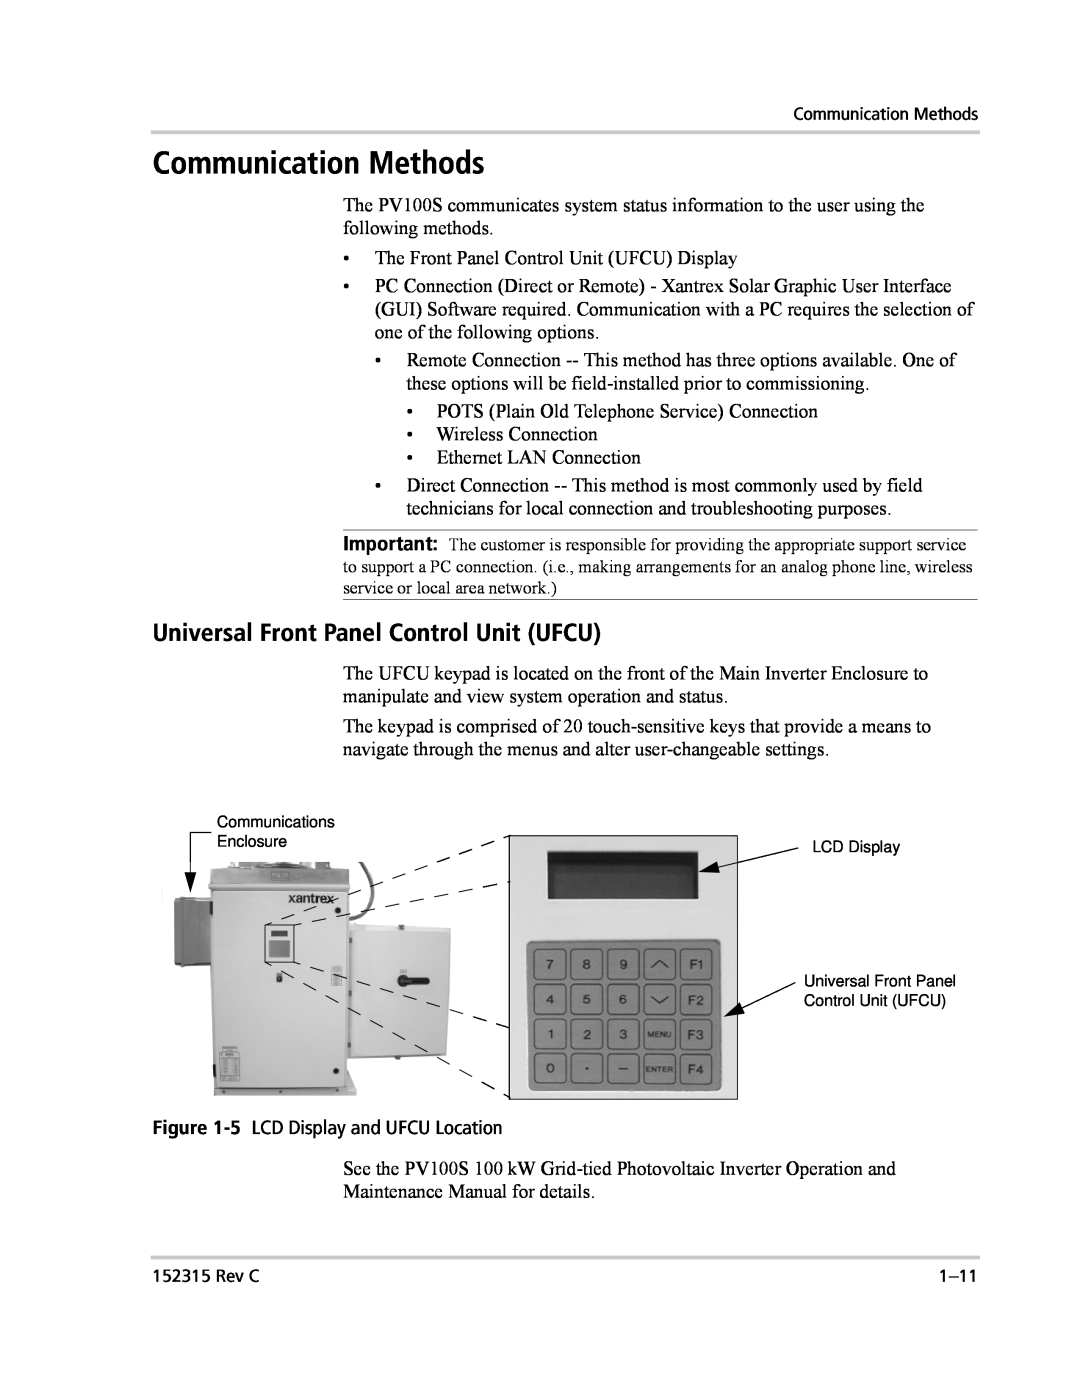 Xantrex Technology PV100S-480 installation manual Communication Methods, Universal Front Panel Control Unit UFCU 